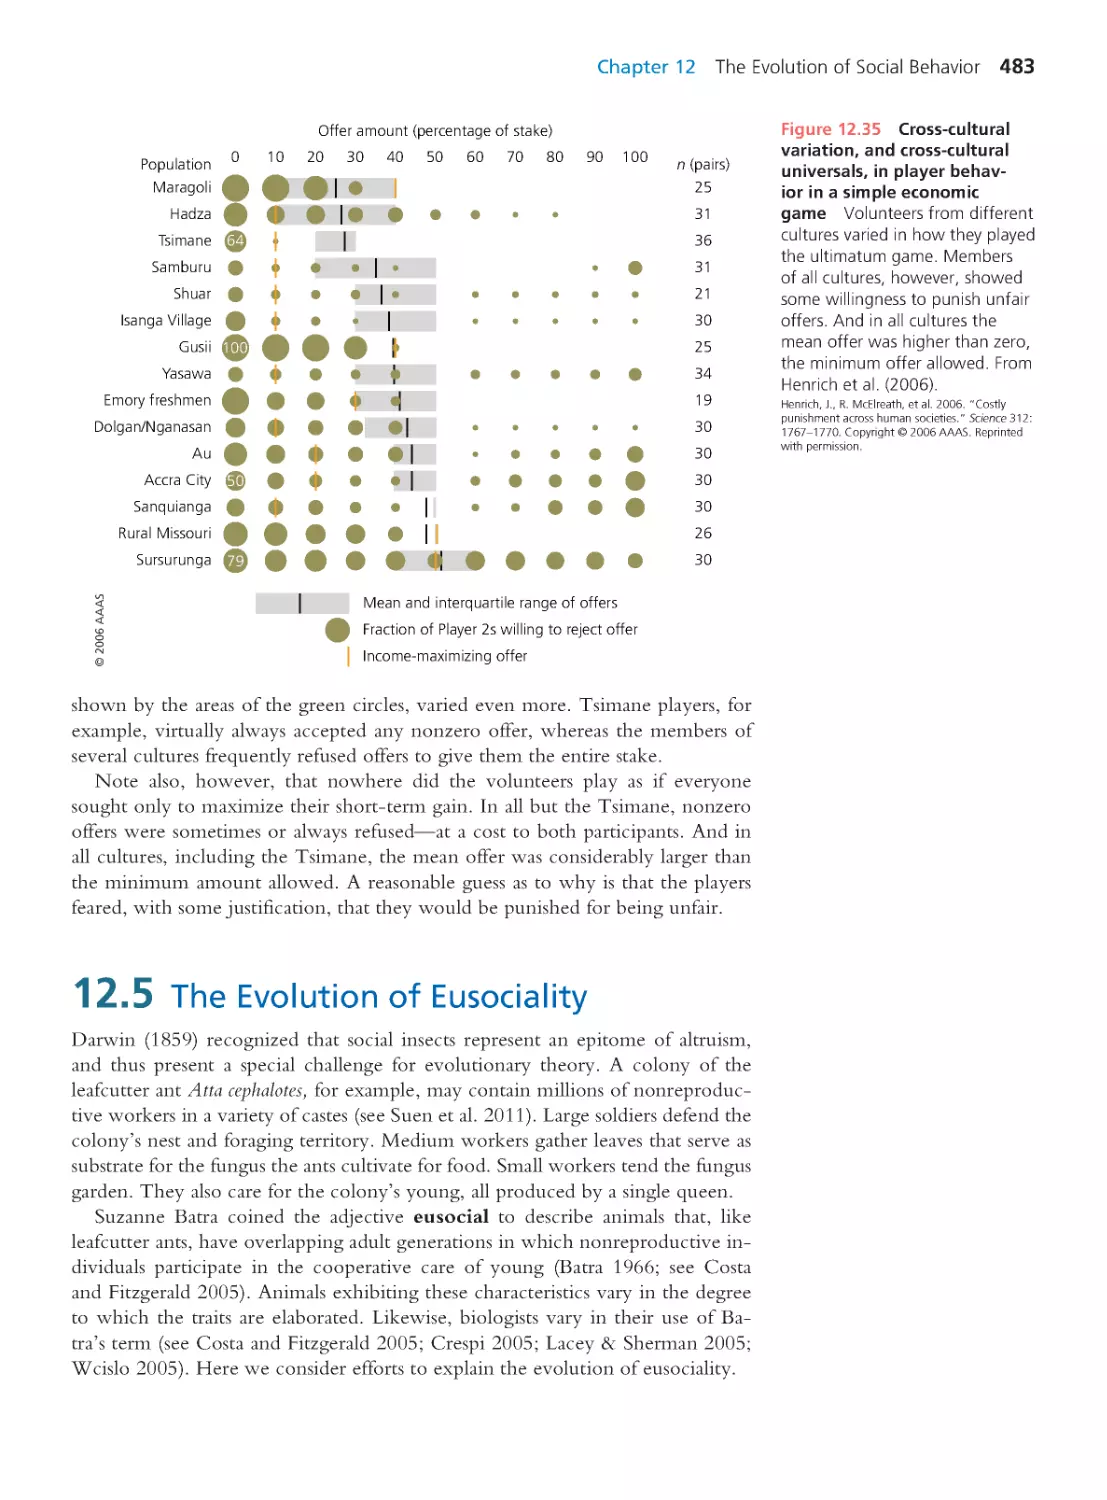 12.5 The Evolution of Eusociality